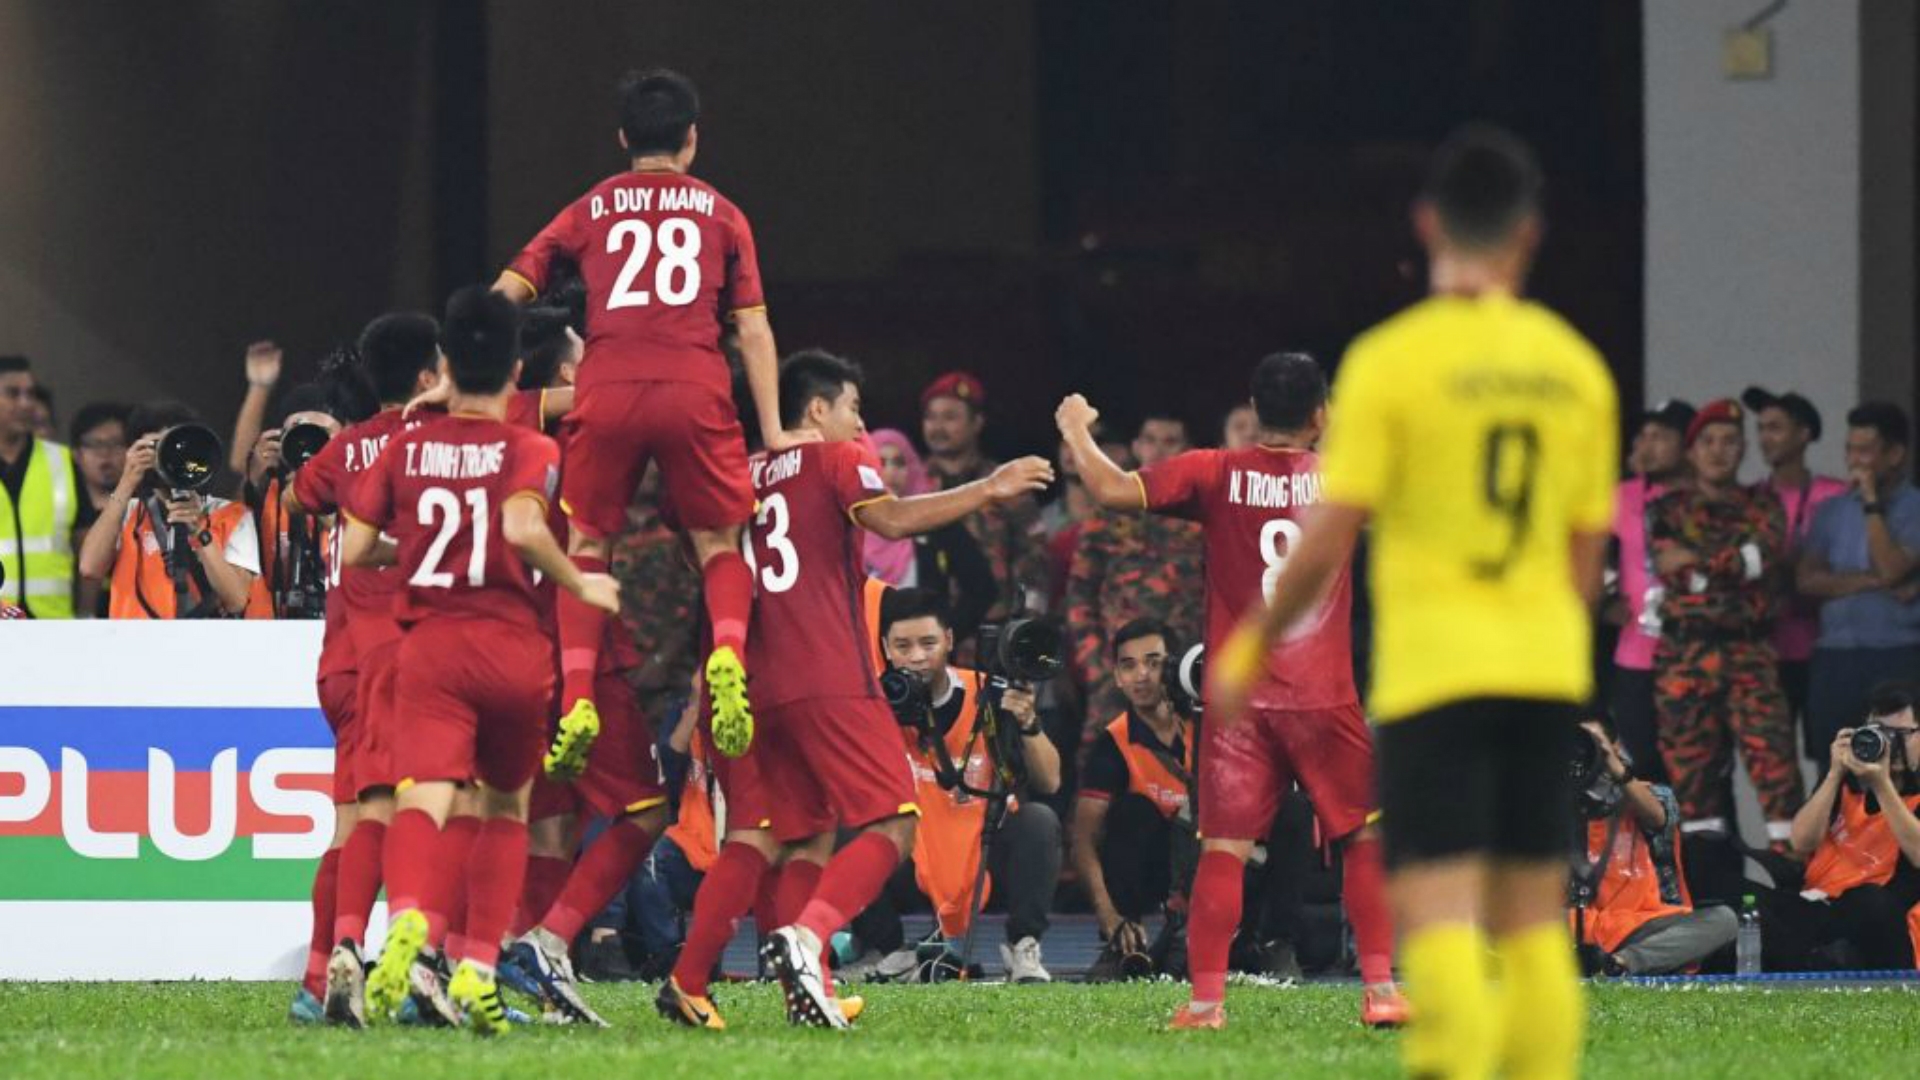 Piala aff malaysia vs vietnam